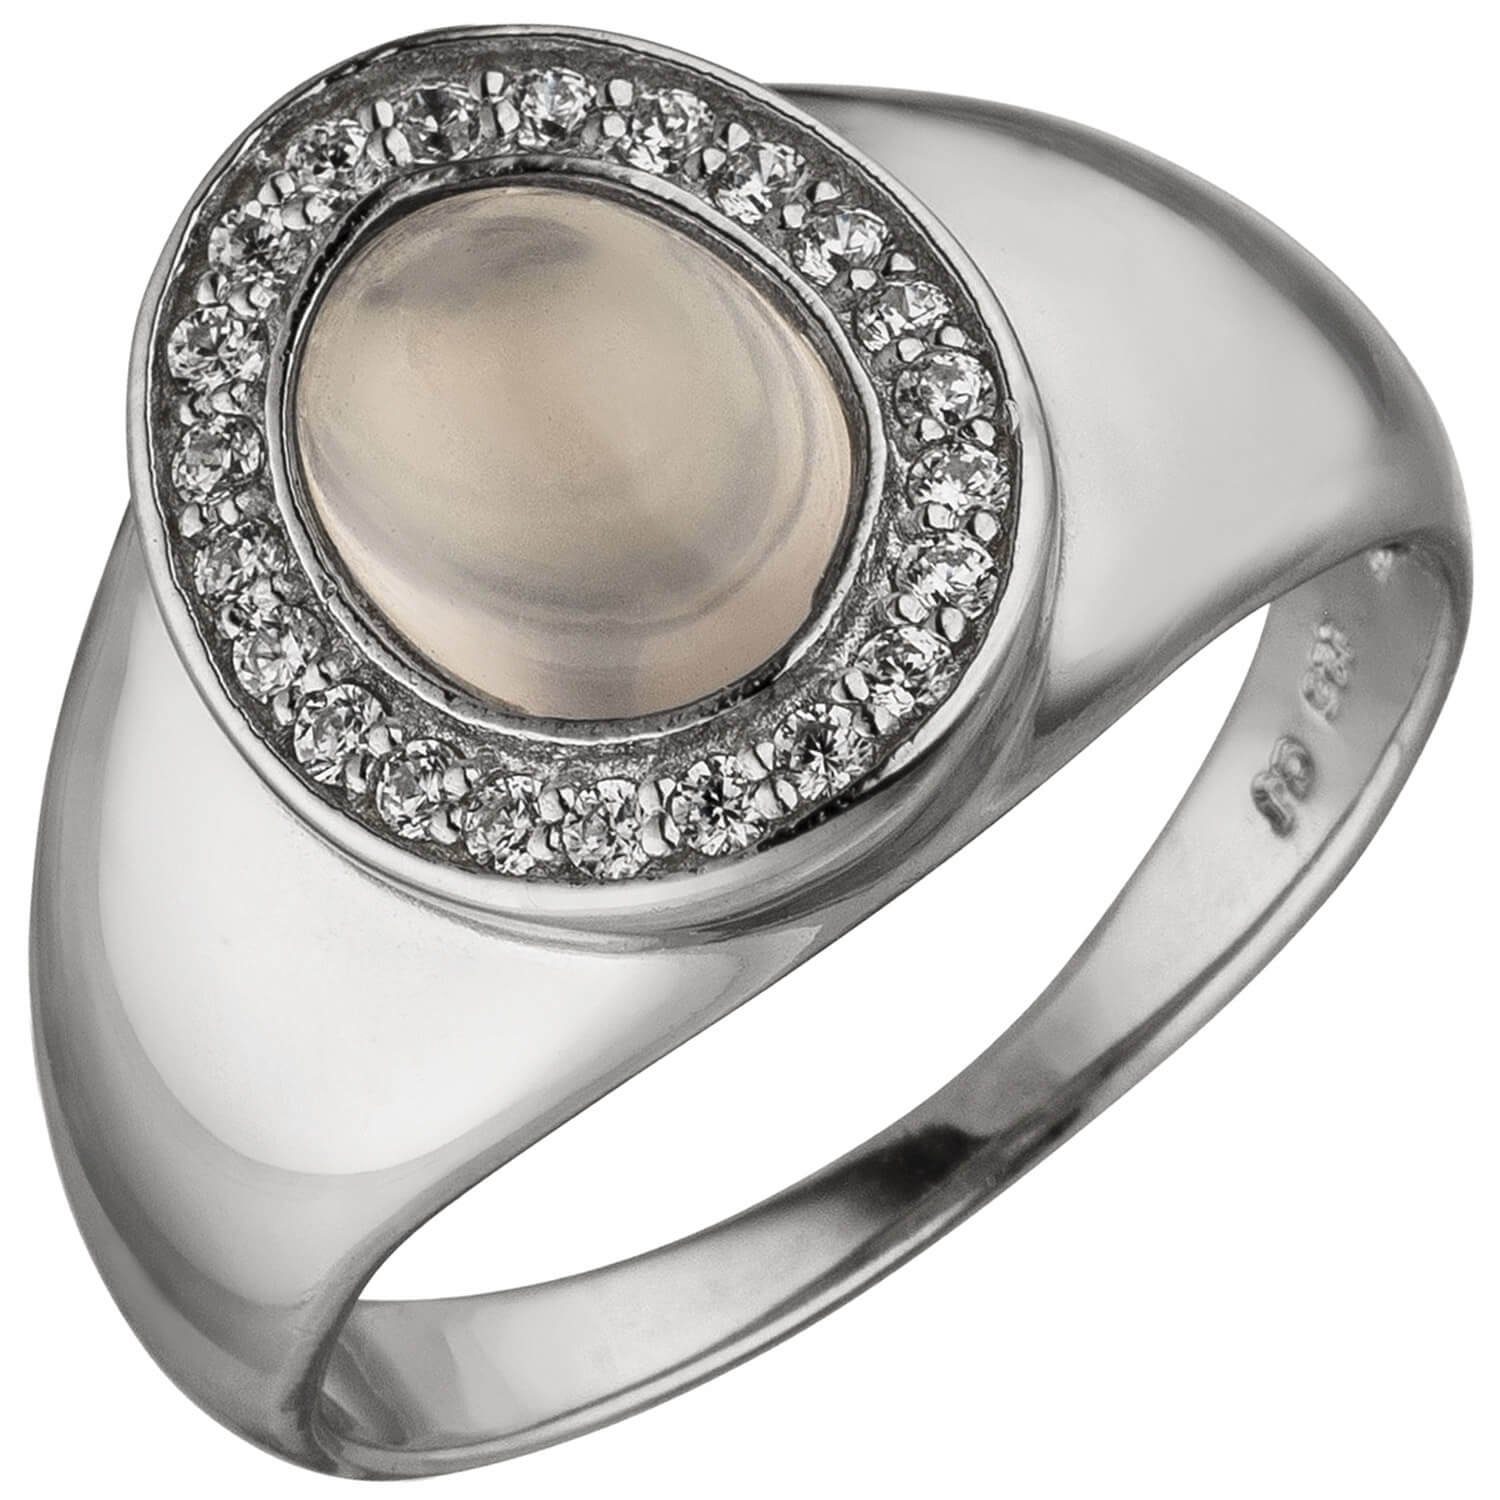 Schmuck Krone Silberring Ring mit Rosenquarz oval & 22 Zirkonia B 12,4mm 925 Silber rhodiniert Fingerring, Silber 925